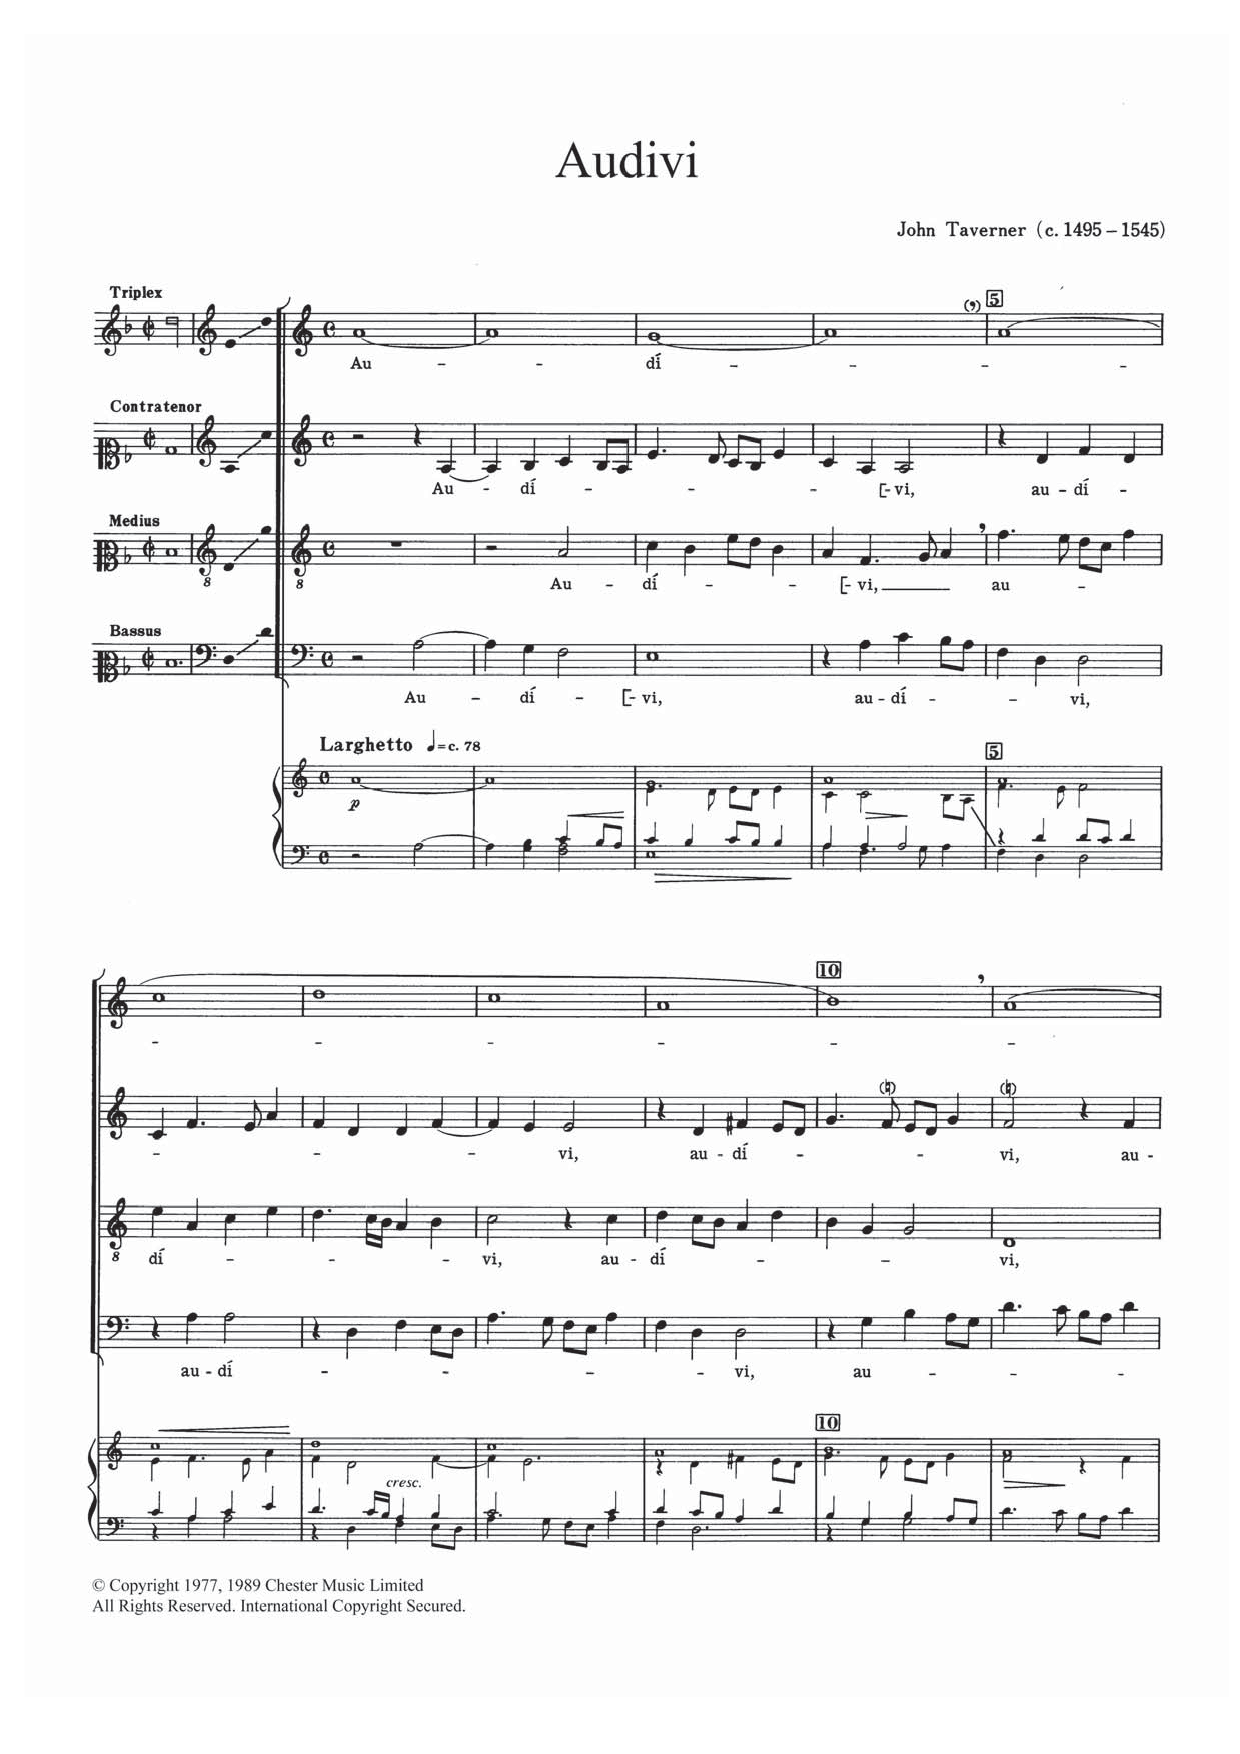 John Taverner Audivi Sheet Music Notes & Chords for SATB - Download or Print PDF